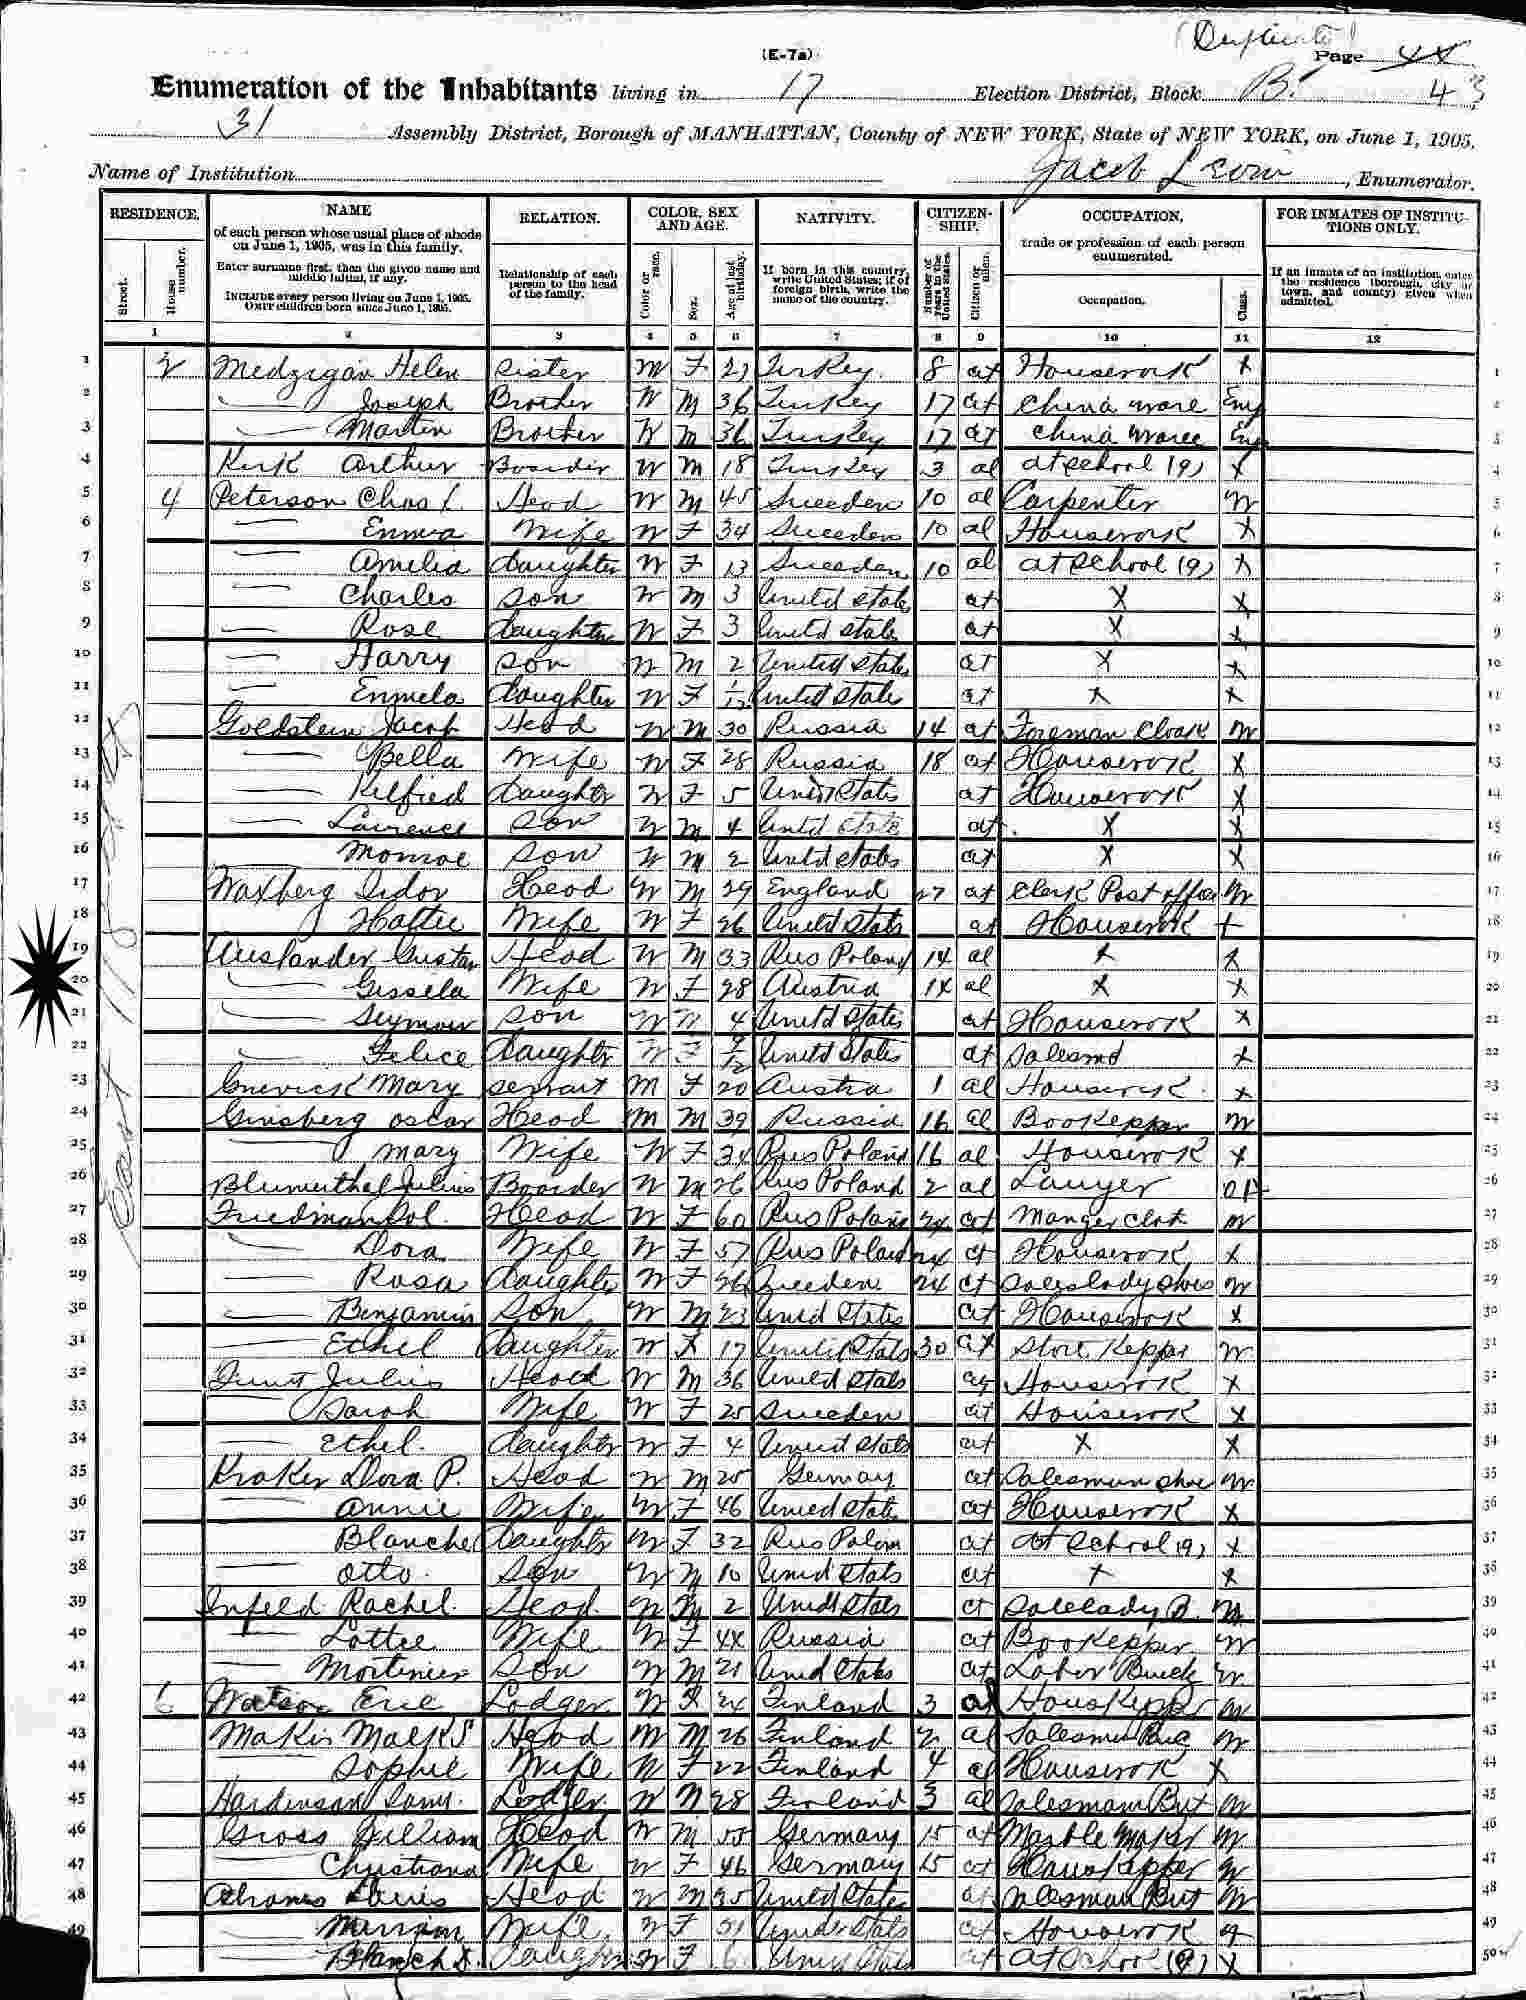 1925 new york census